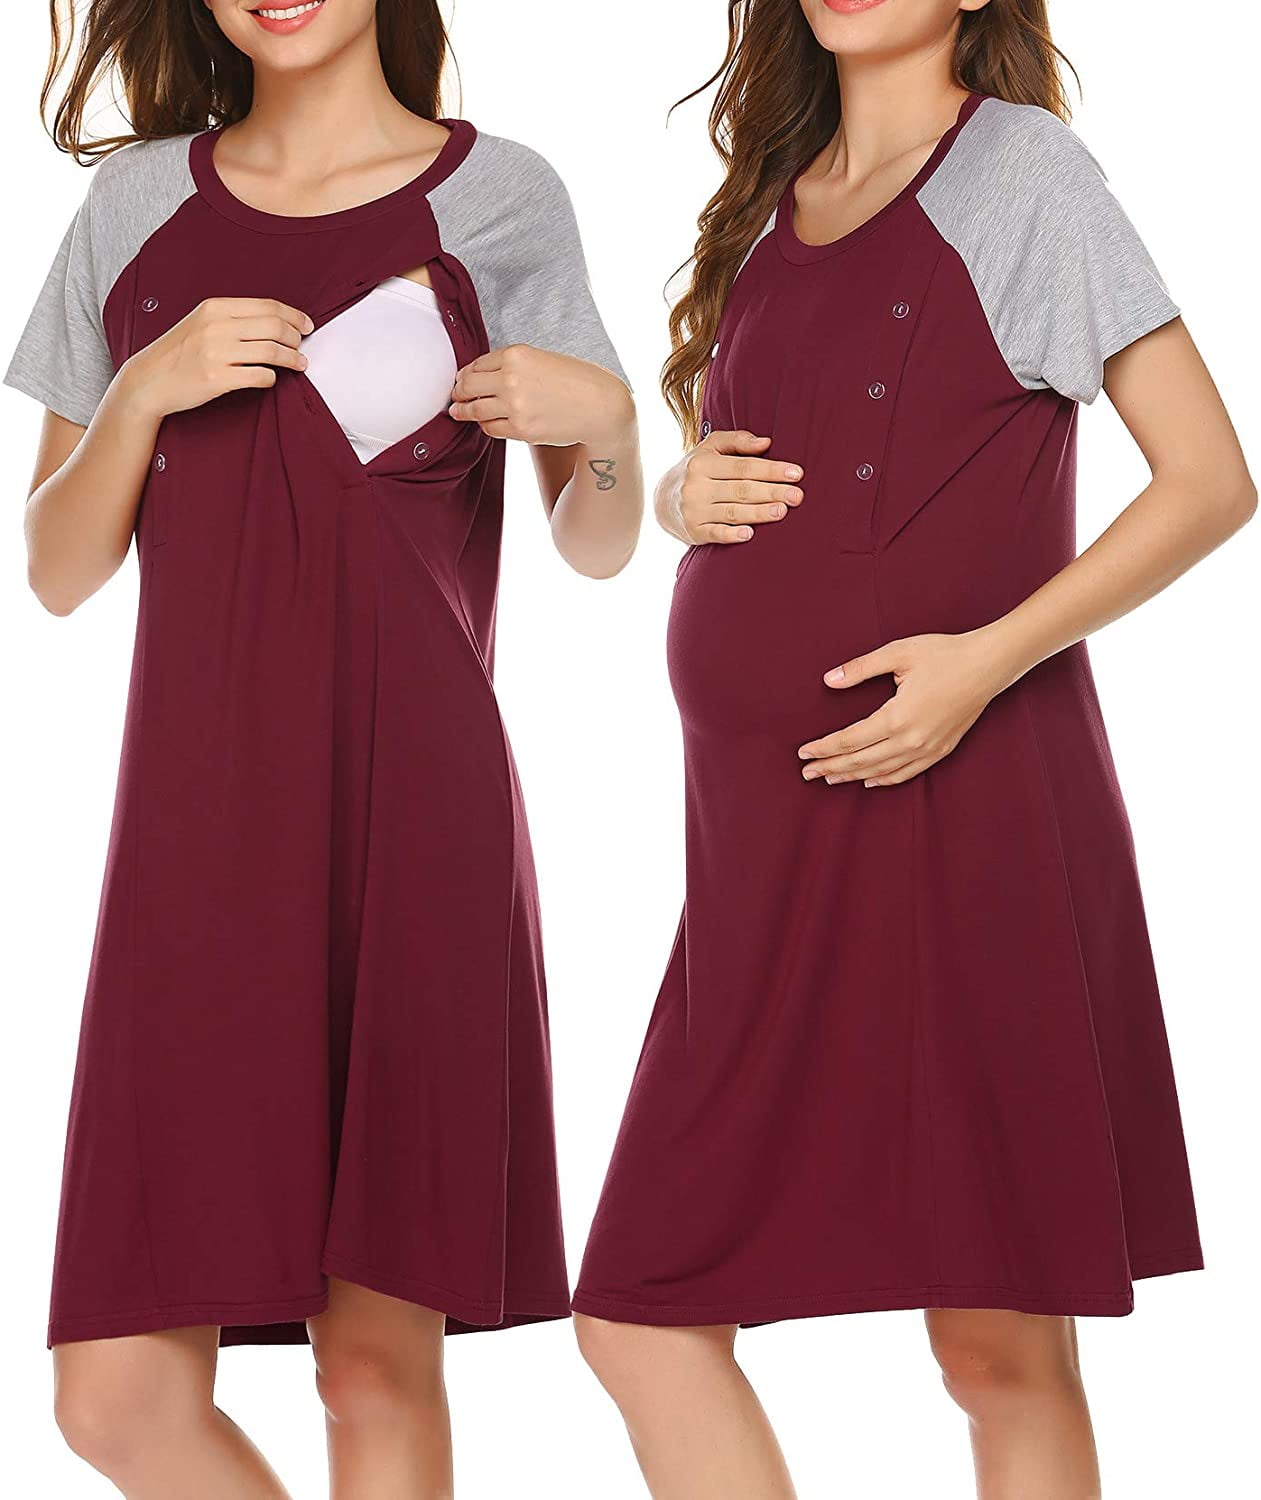 Peauty 3 in 1 Delivery/Labor/Nursing Nightgown/Maternity Hospital Gown Postpartum Zipper Breastfeeding Sleepwear